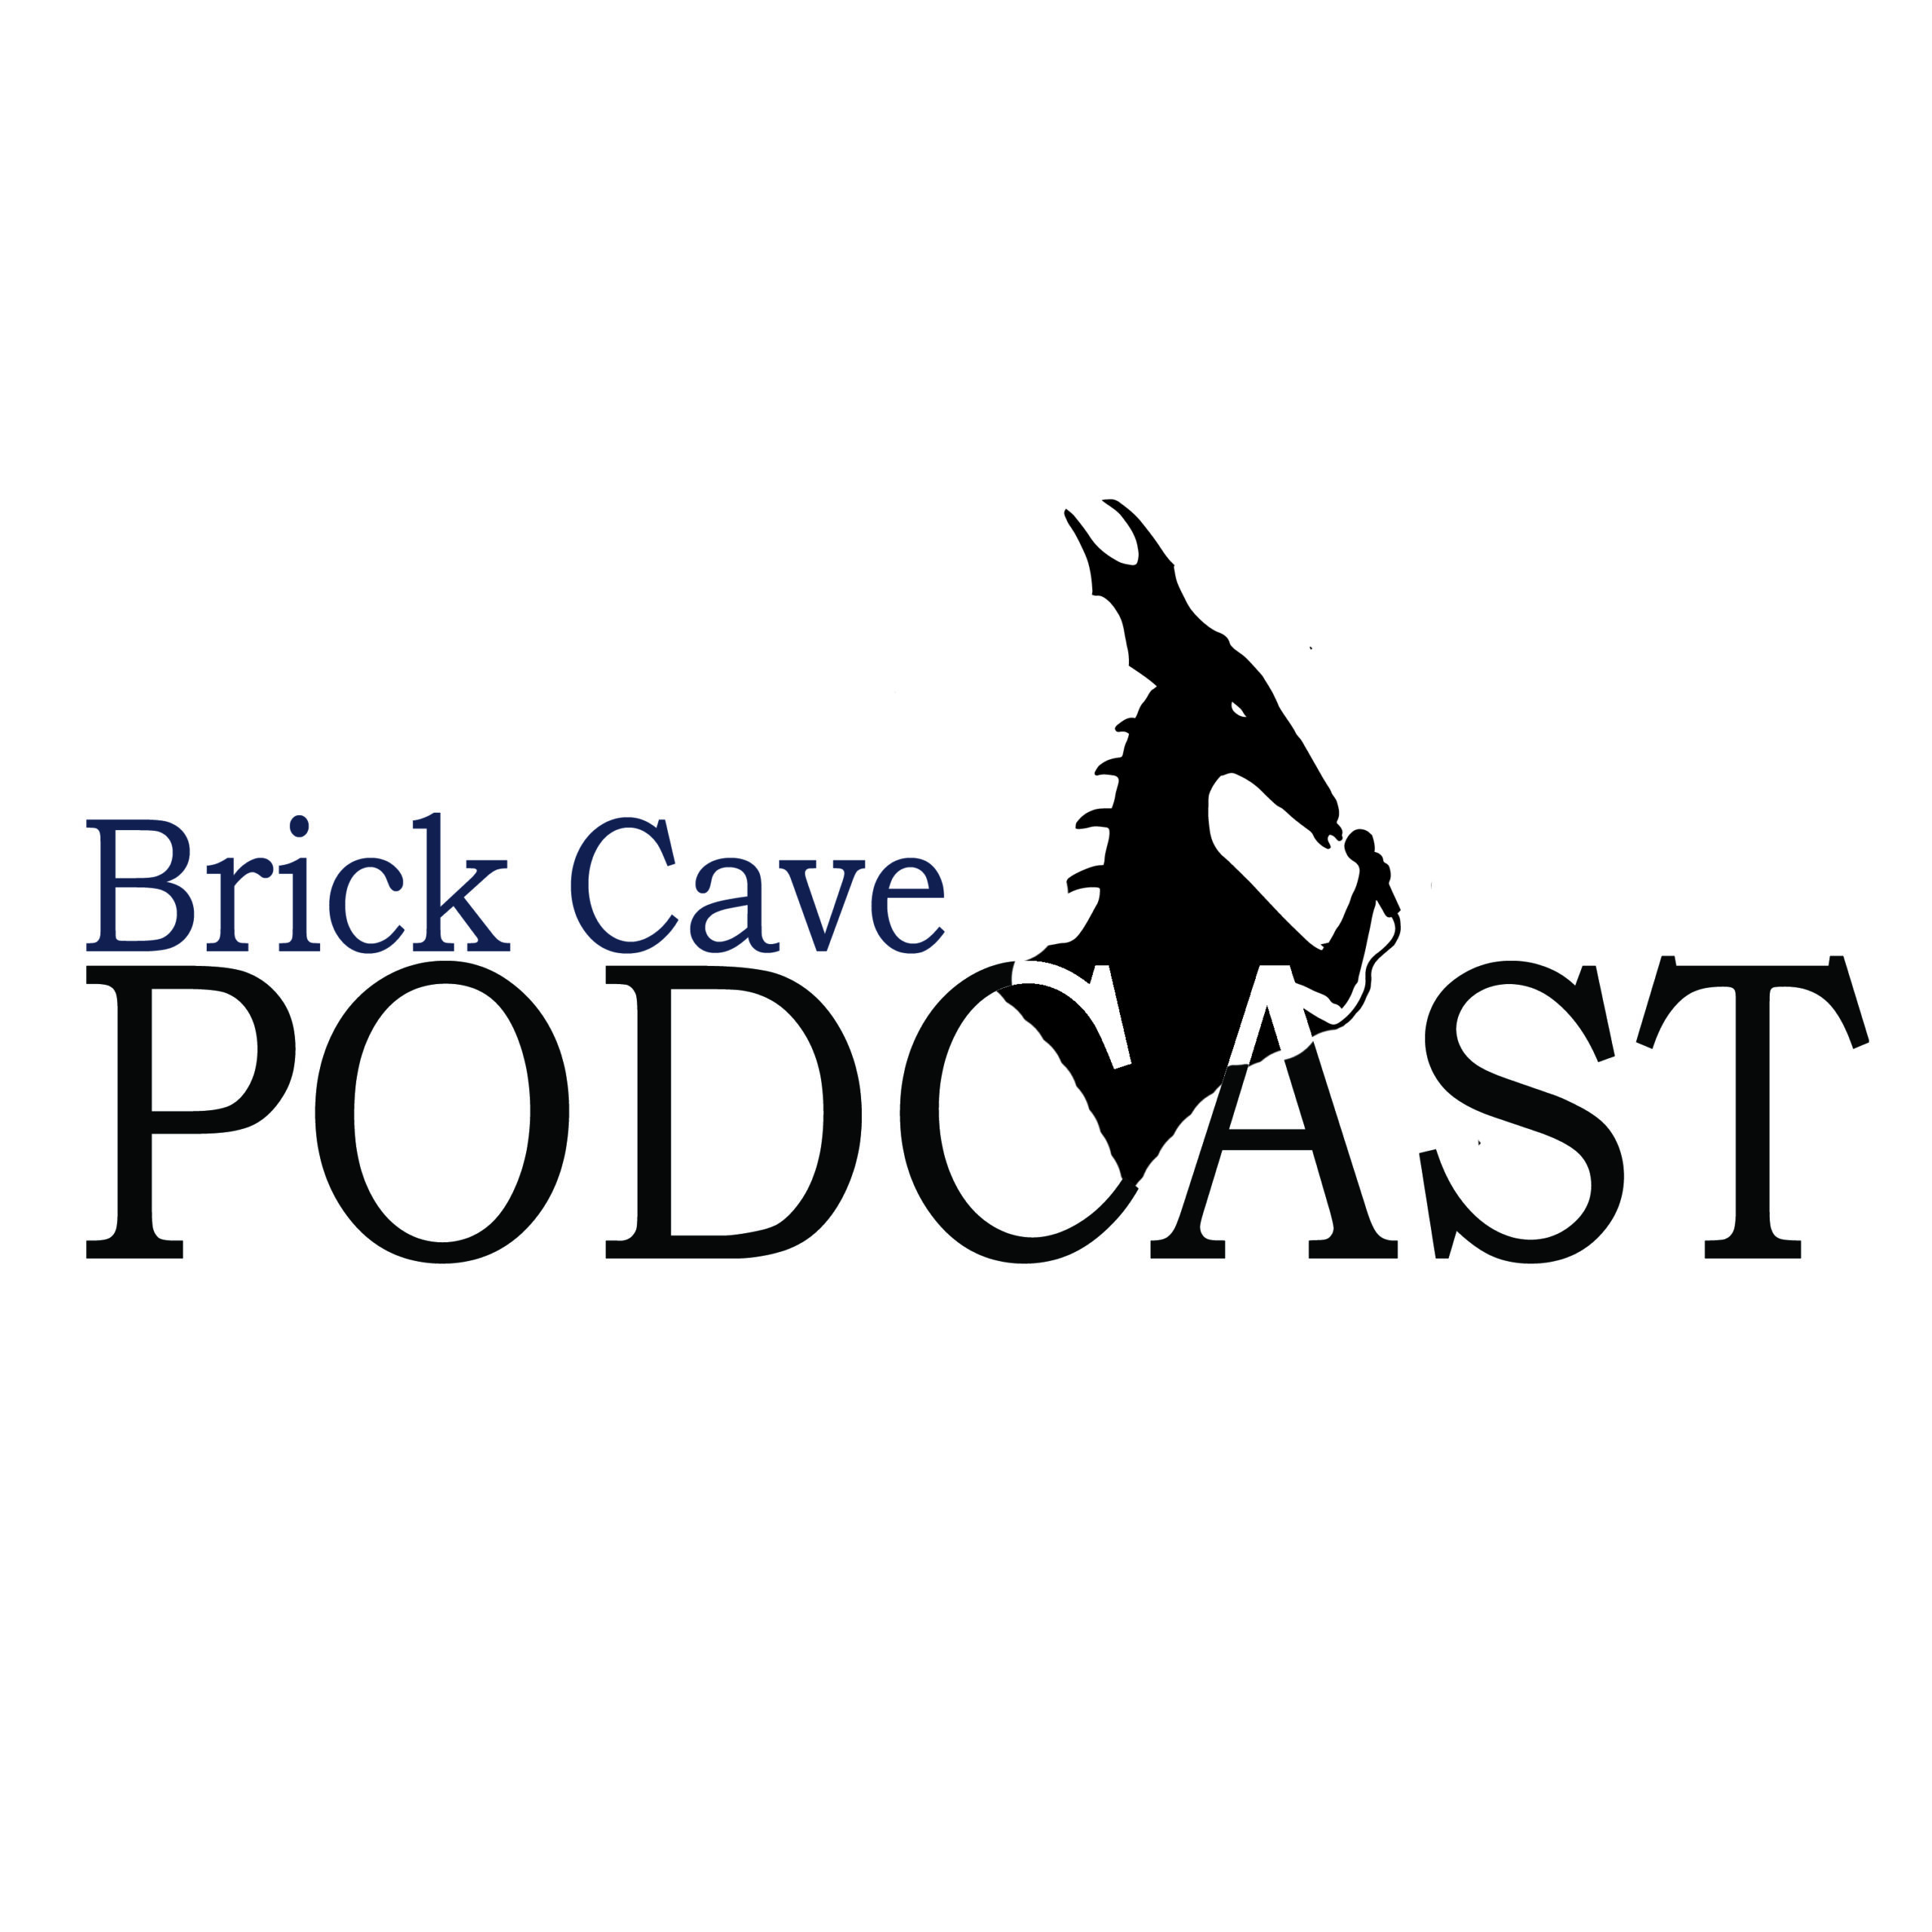 The Brick Cave Podcast Logo